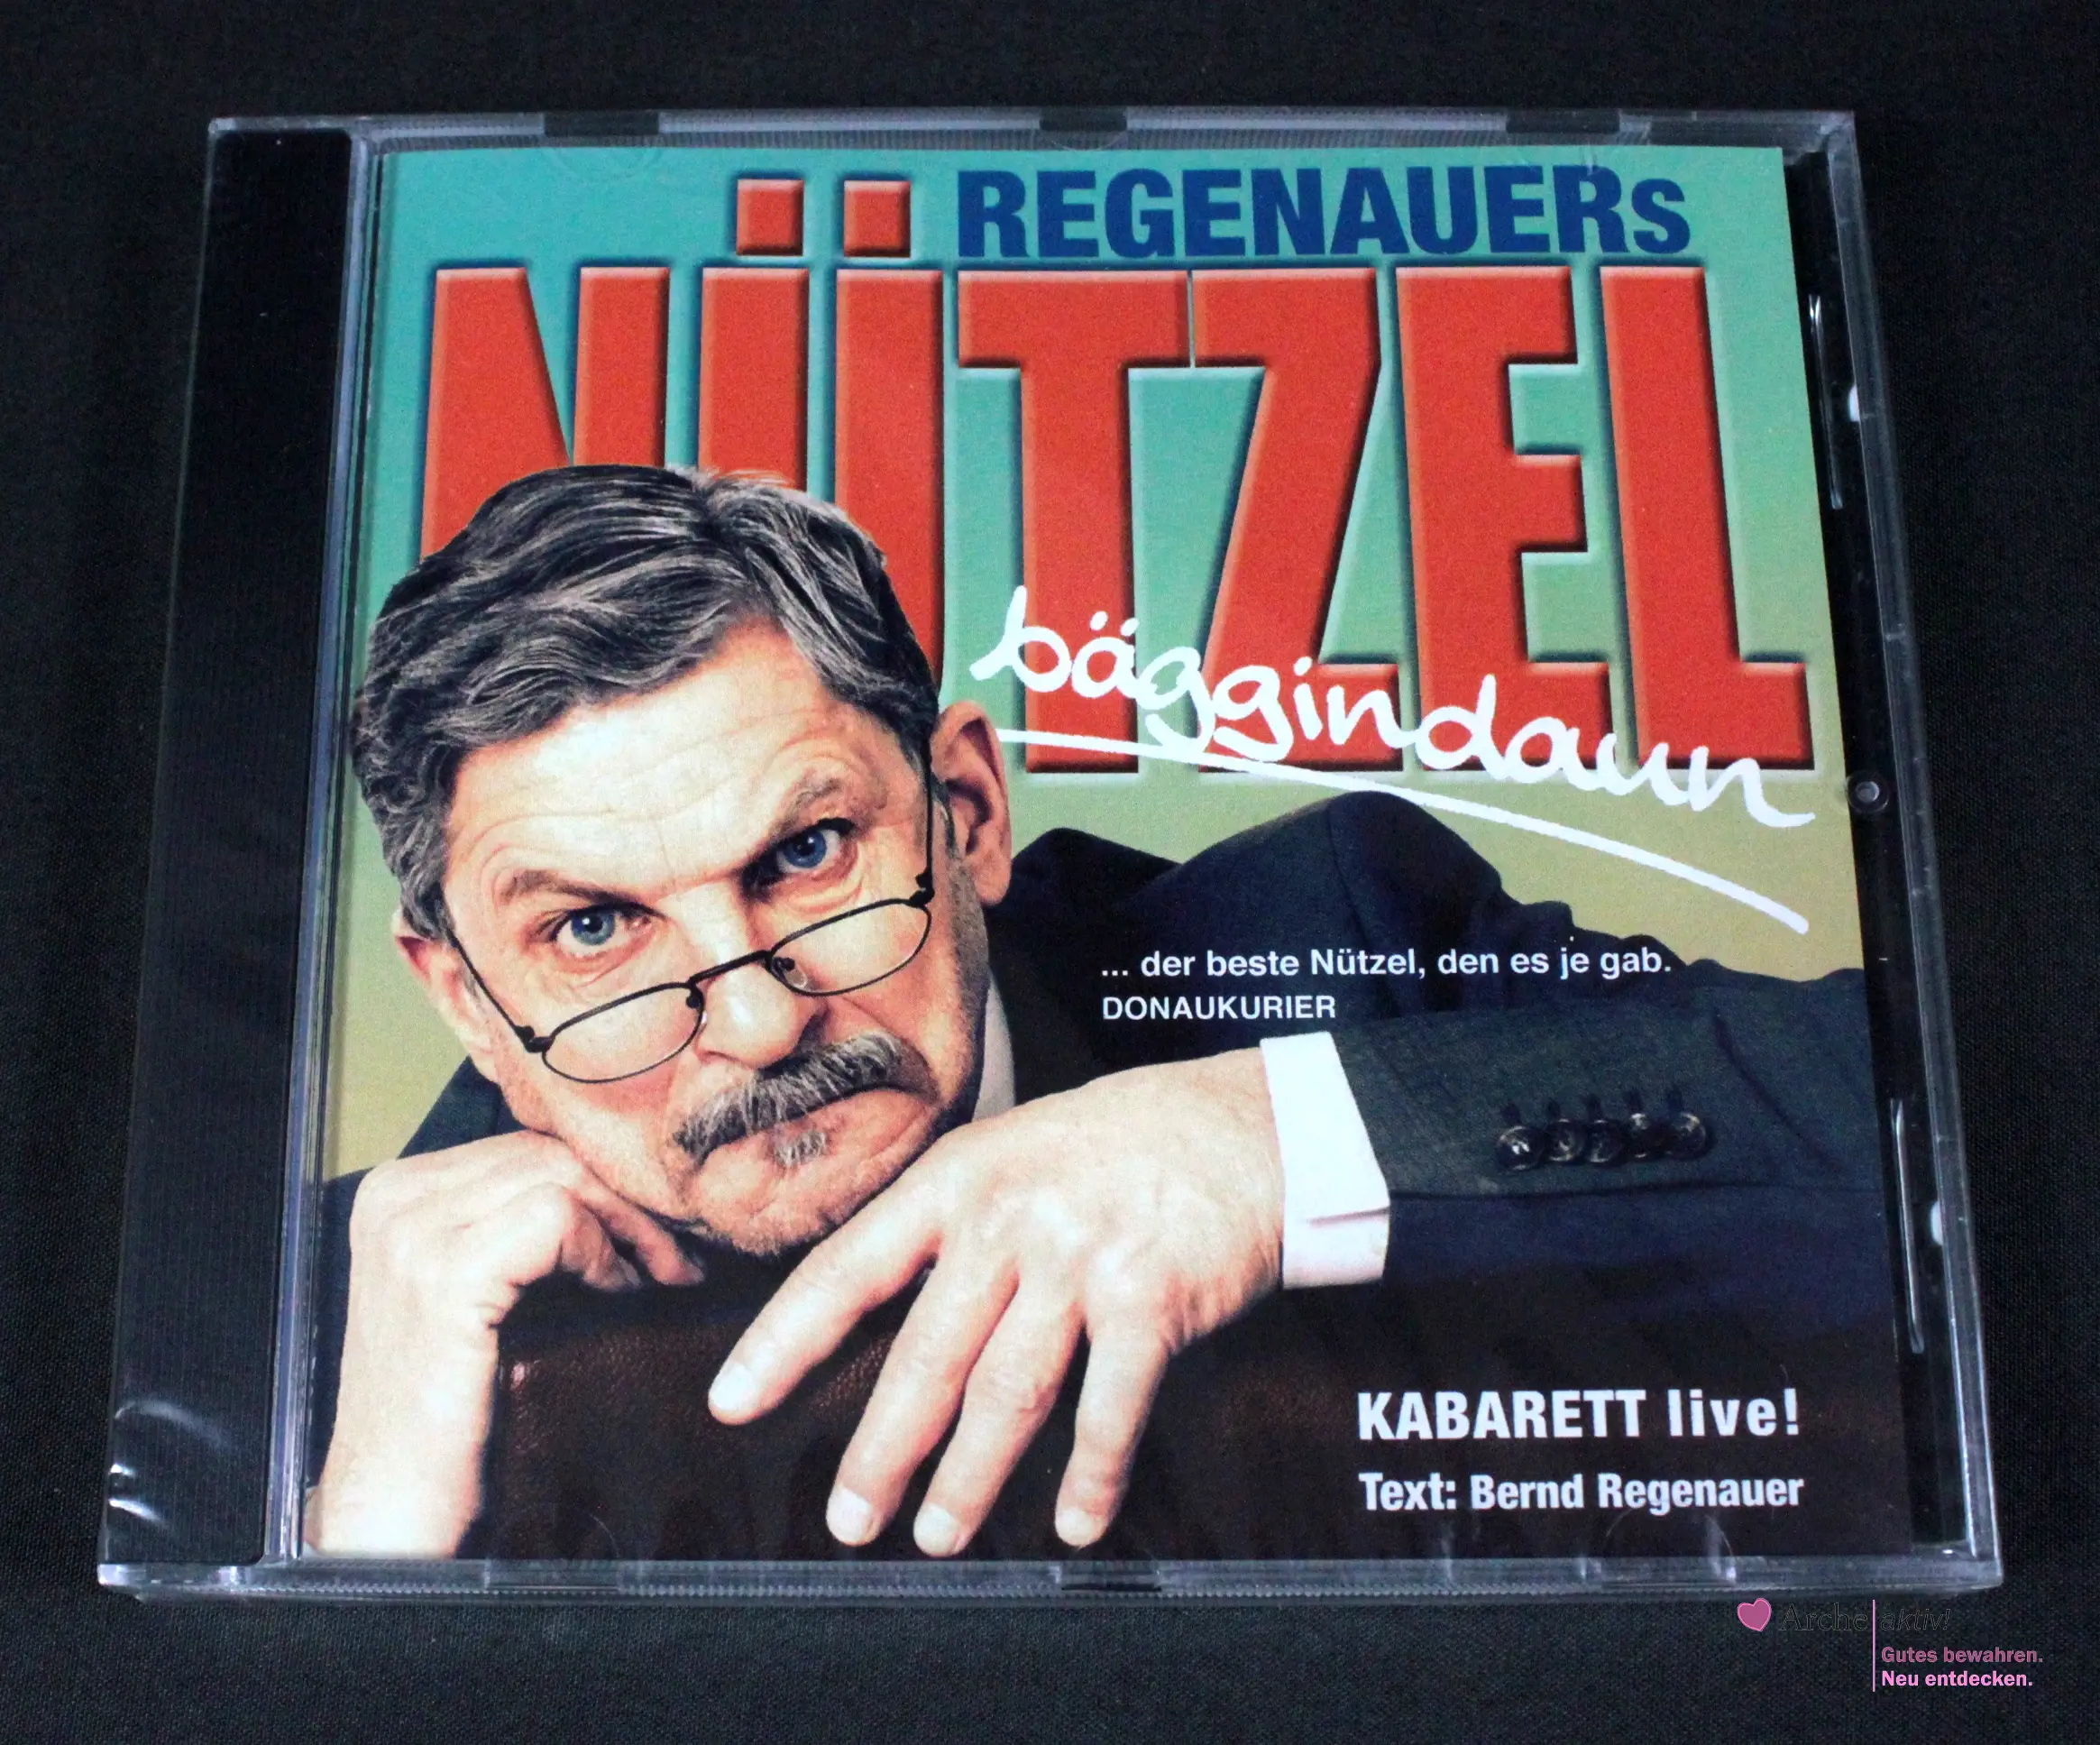 Regenauers Nützel - bäggindaun - Kabarett live! CD, Neu in OVP